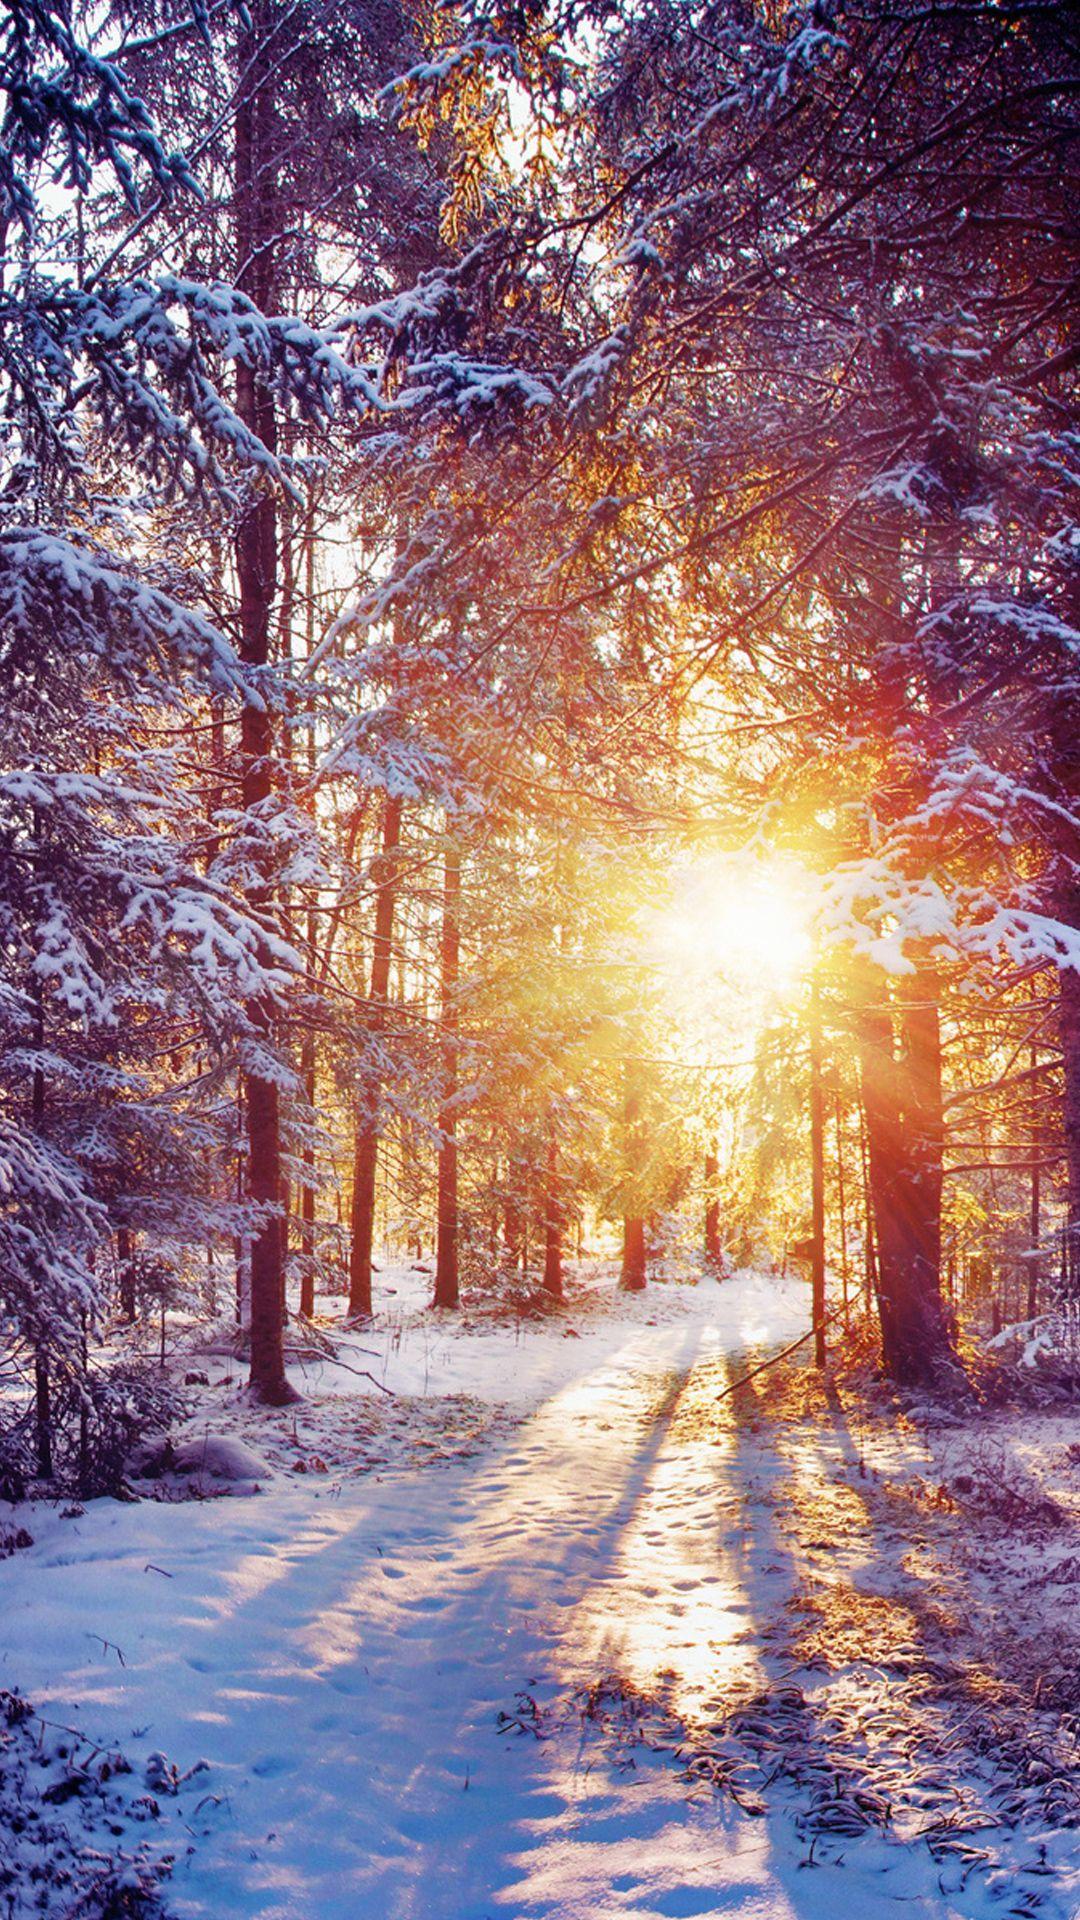 BEAUTIFUL NATURE WALLPAPER FREE TO DOWNLOAD. Style. Winter landscape, Winter wallpaper, iPhone wallpaper winter